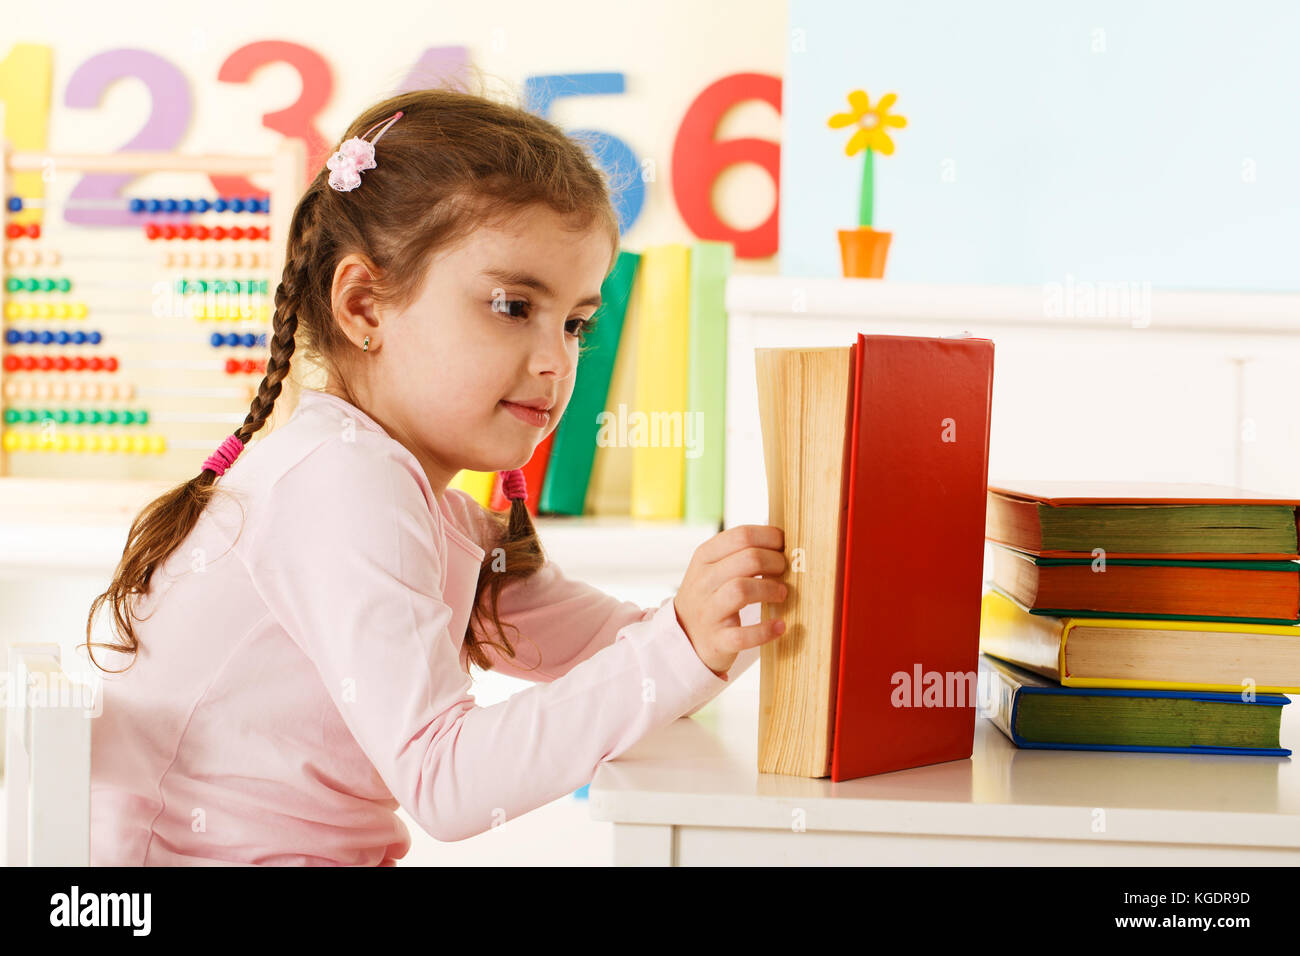 Preschool girl with a books Stock Photo